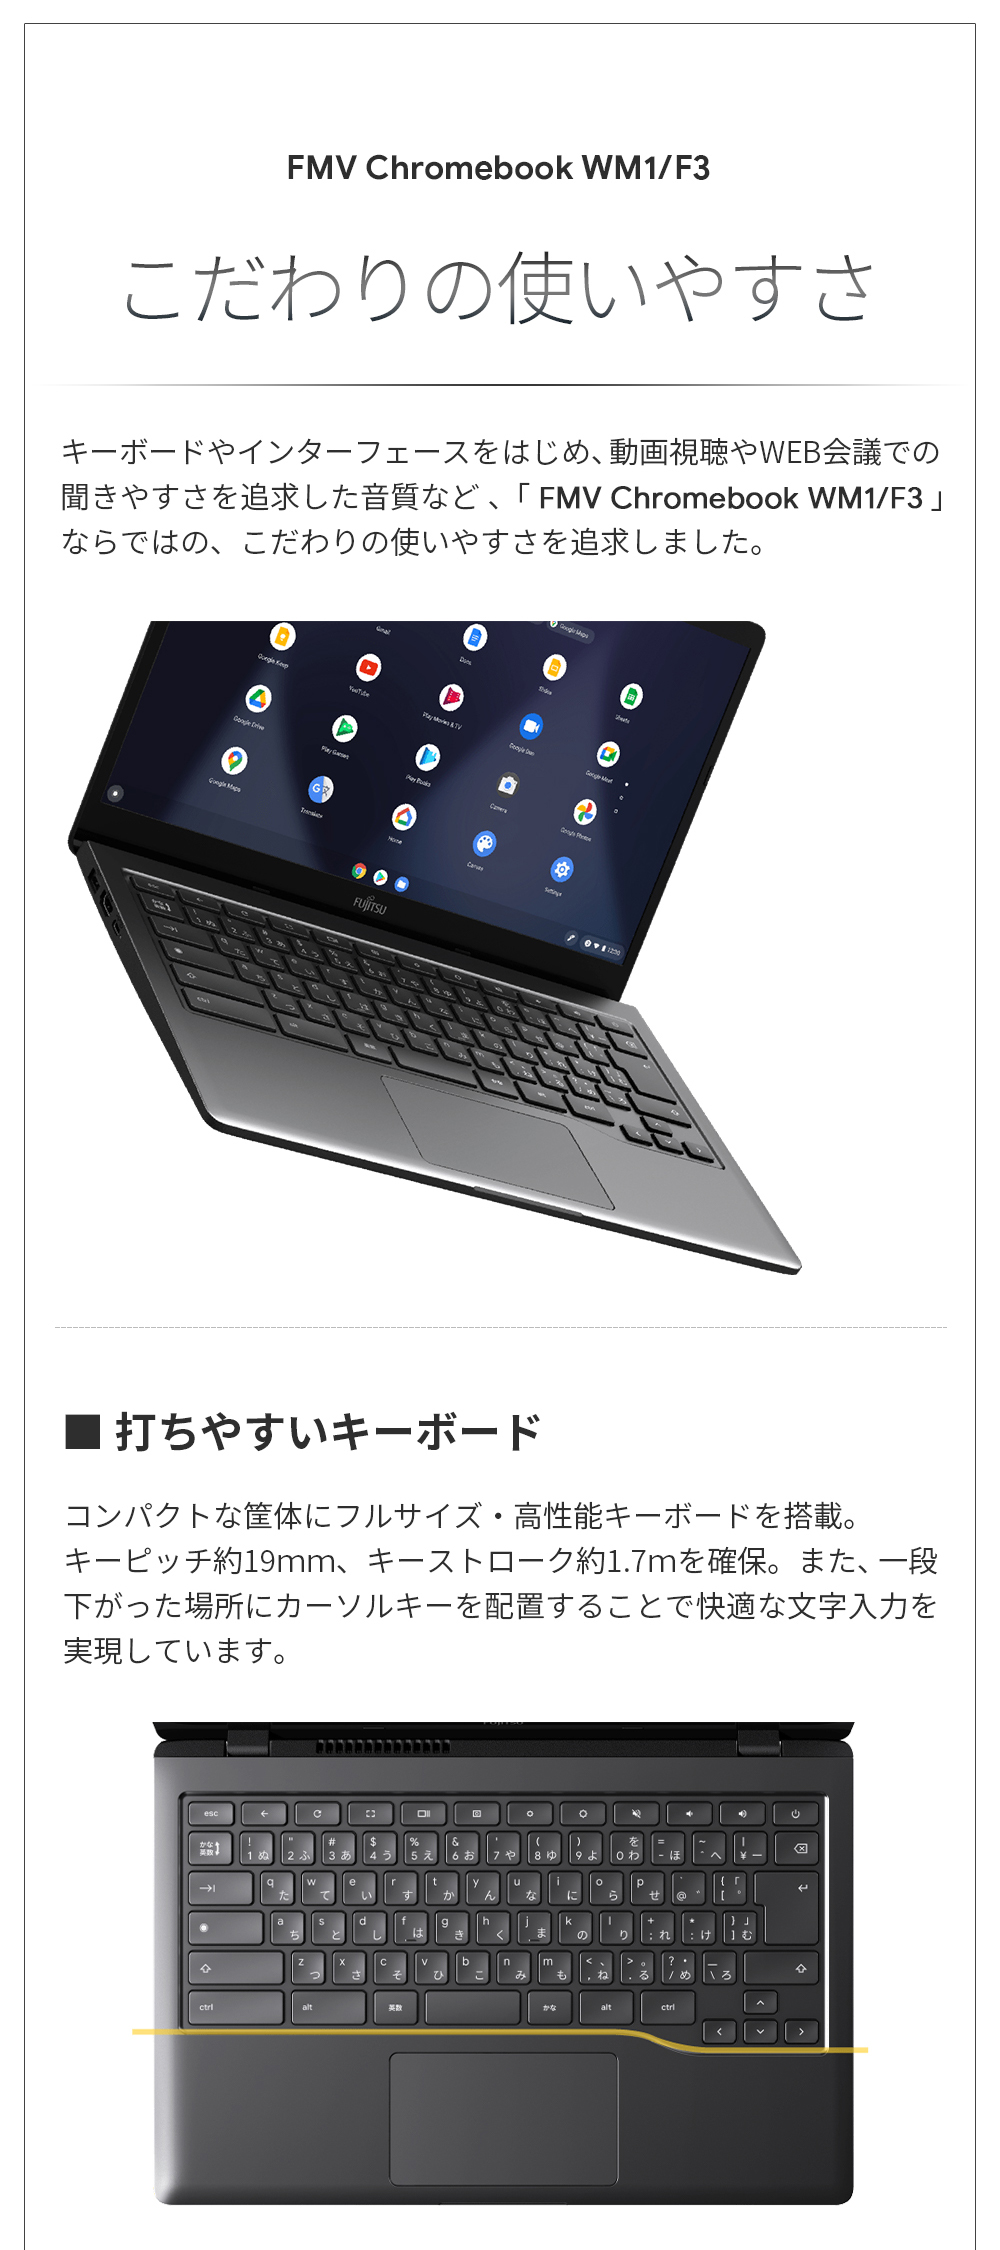 FUJITSU FMV Chromebook WM1/F3